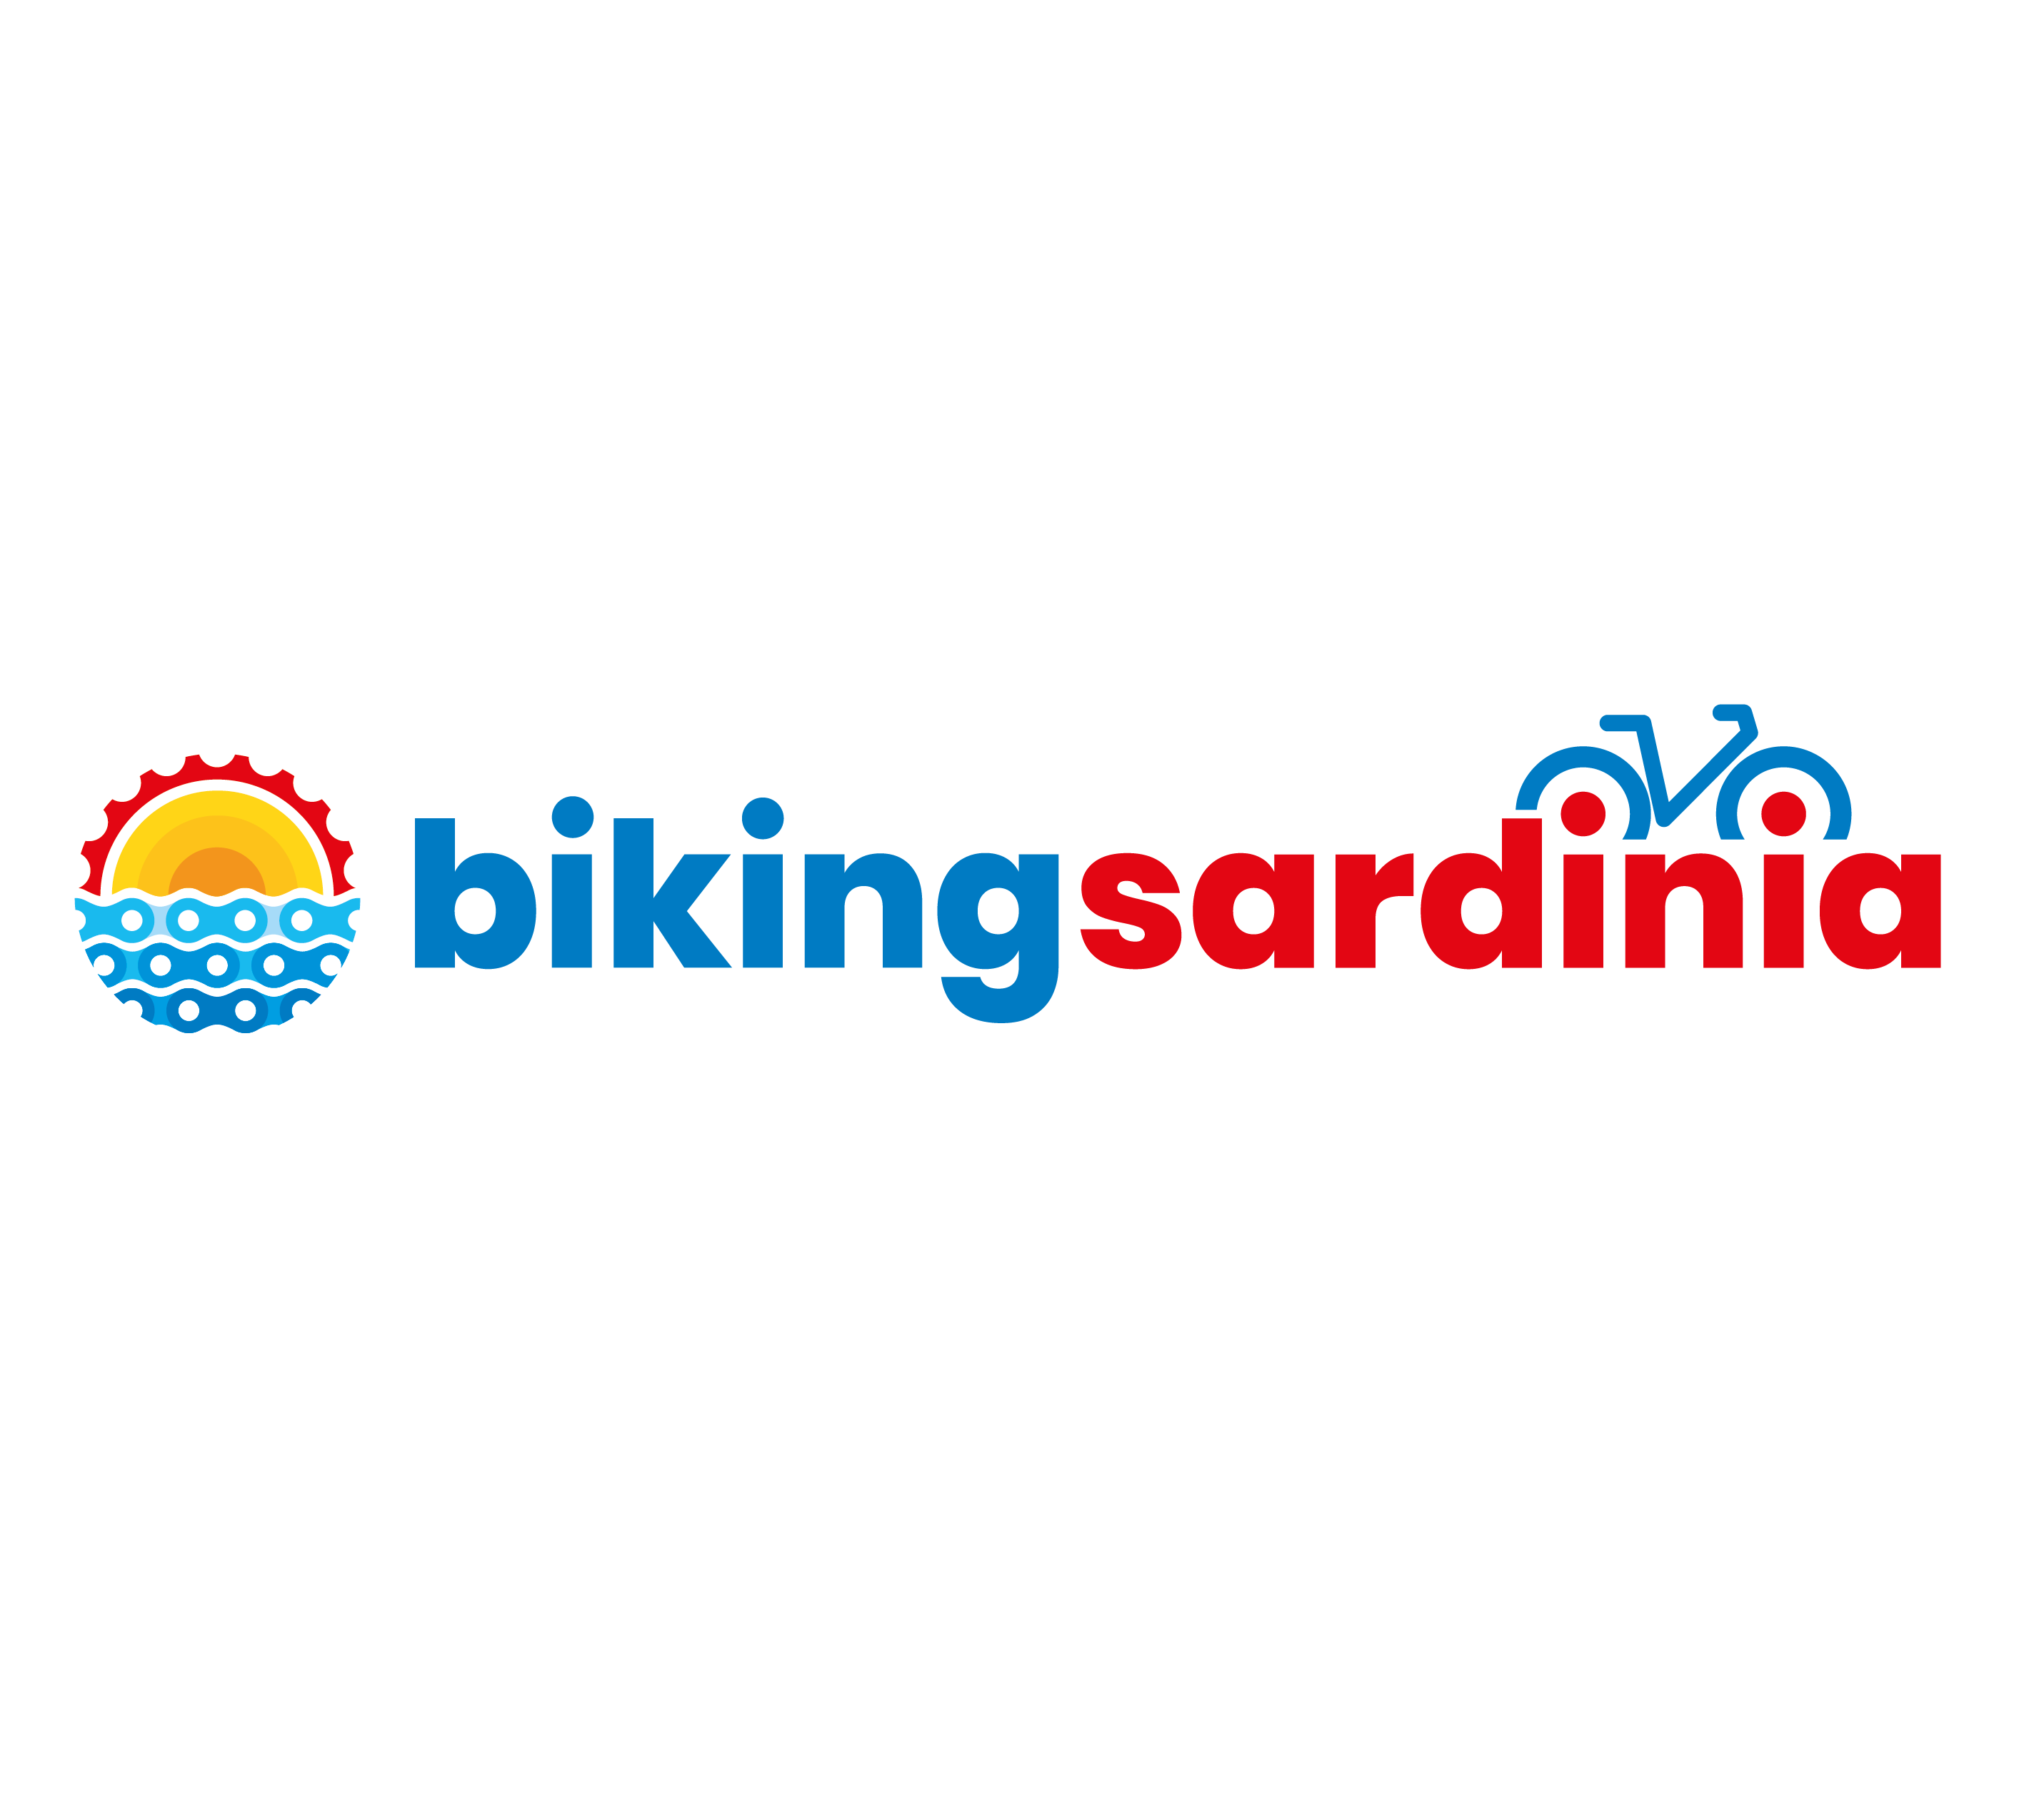 Biking Sardinia : Brand Short Description Type Here.